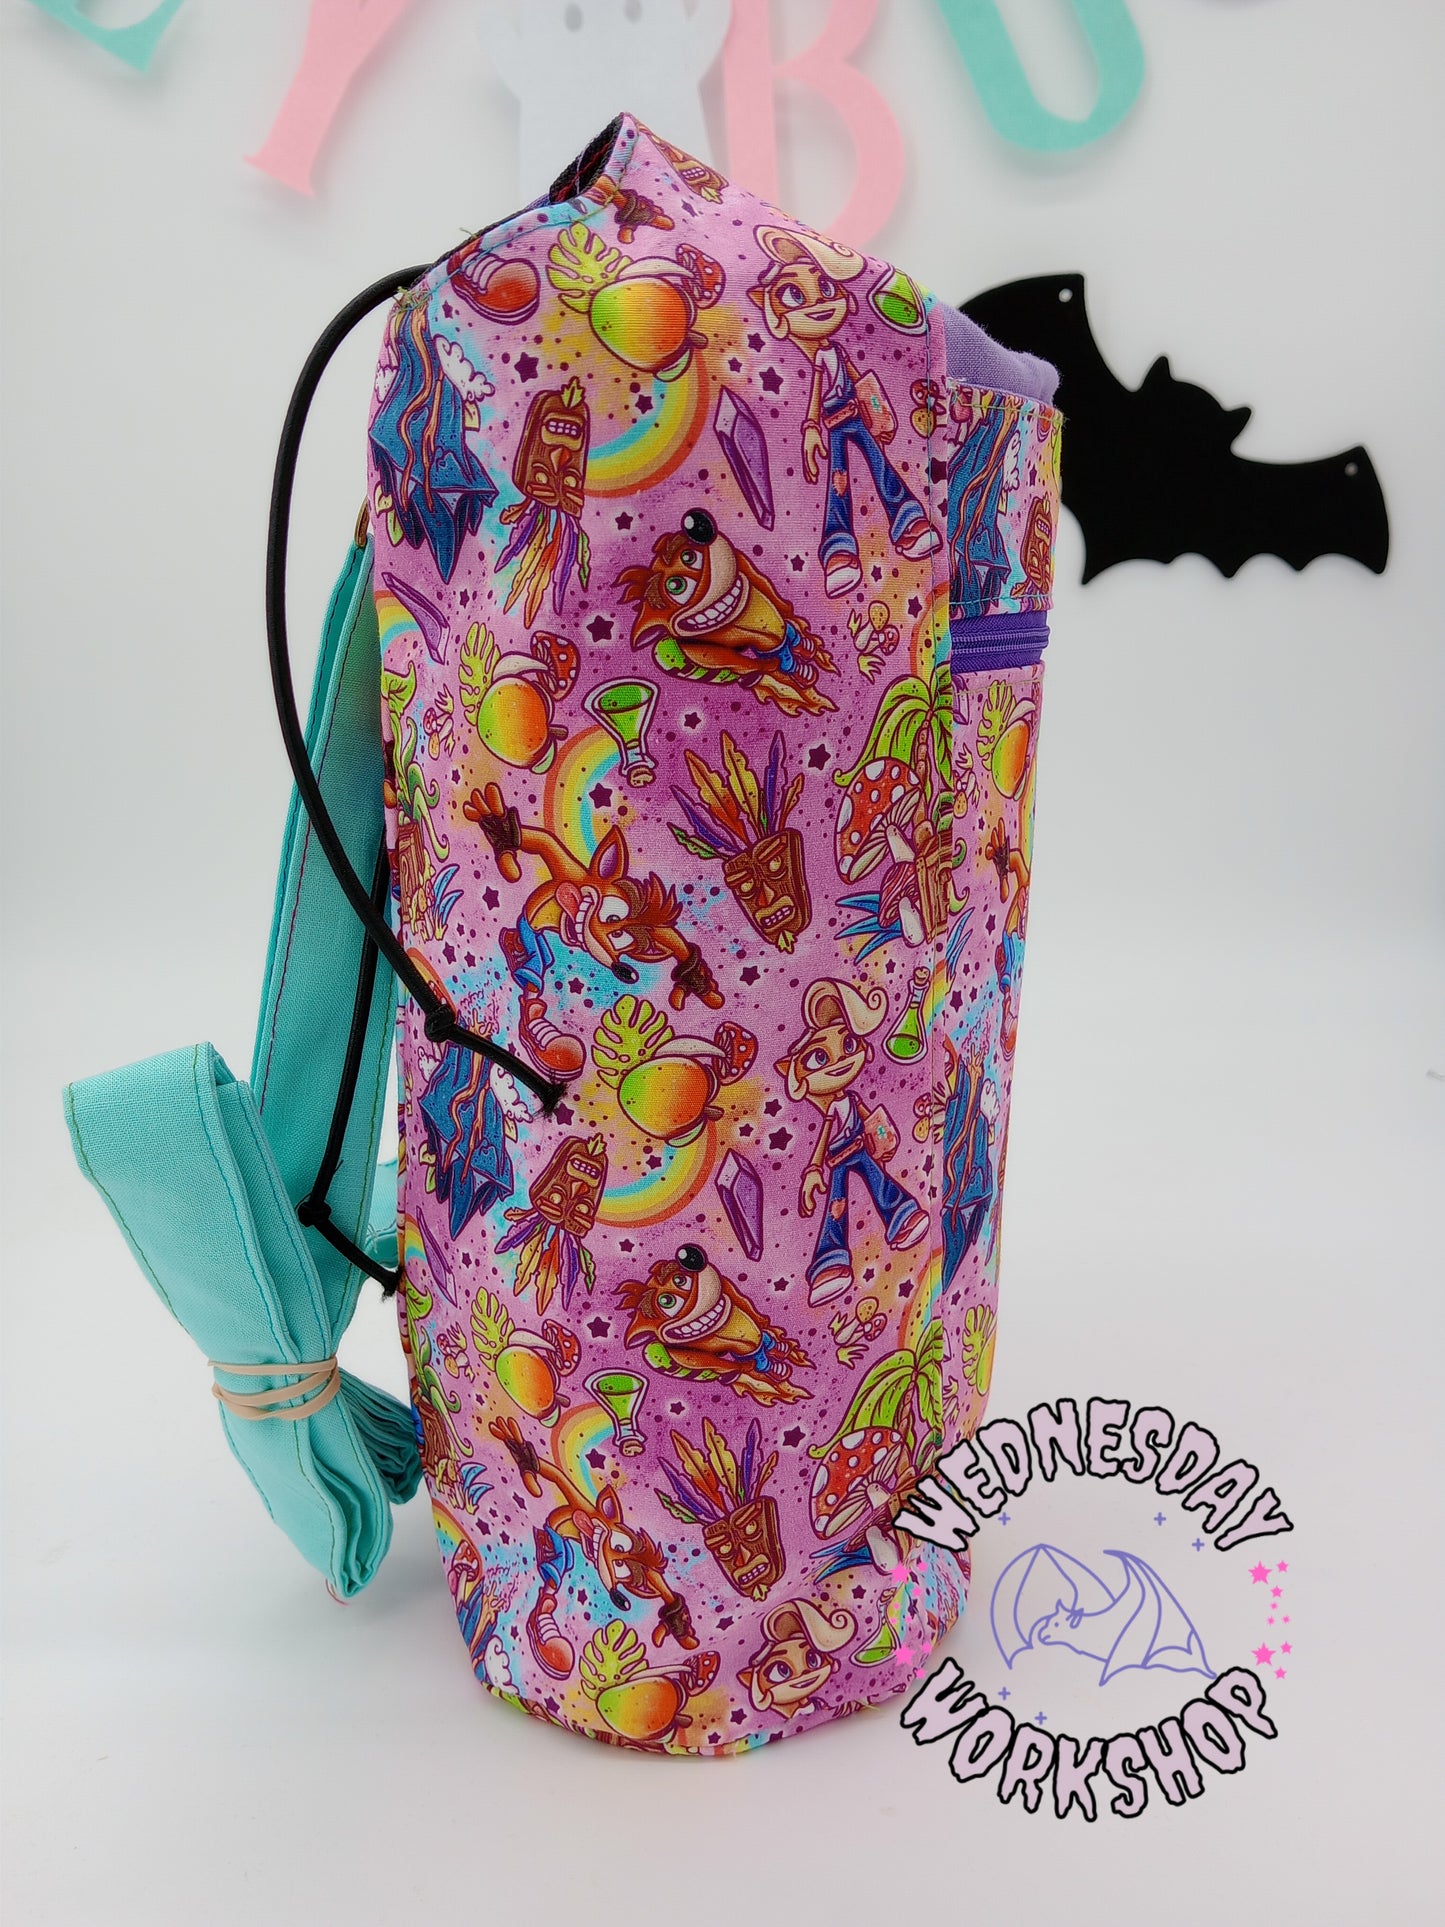 brash candiboot Hyacinth water bottle carrier